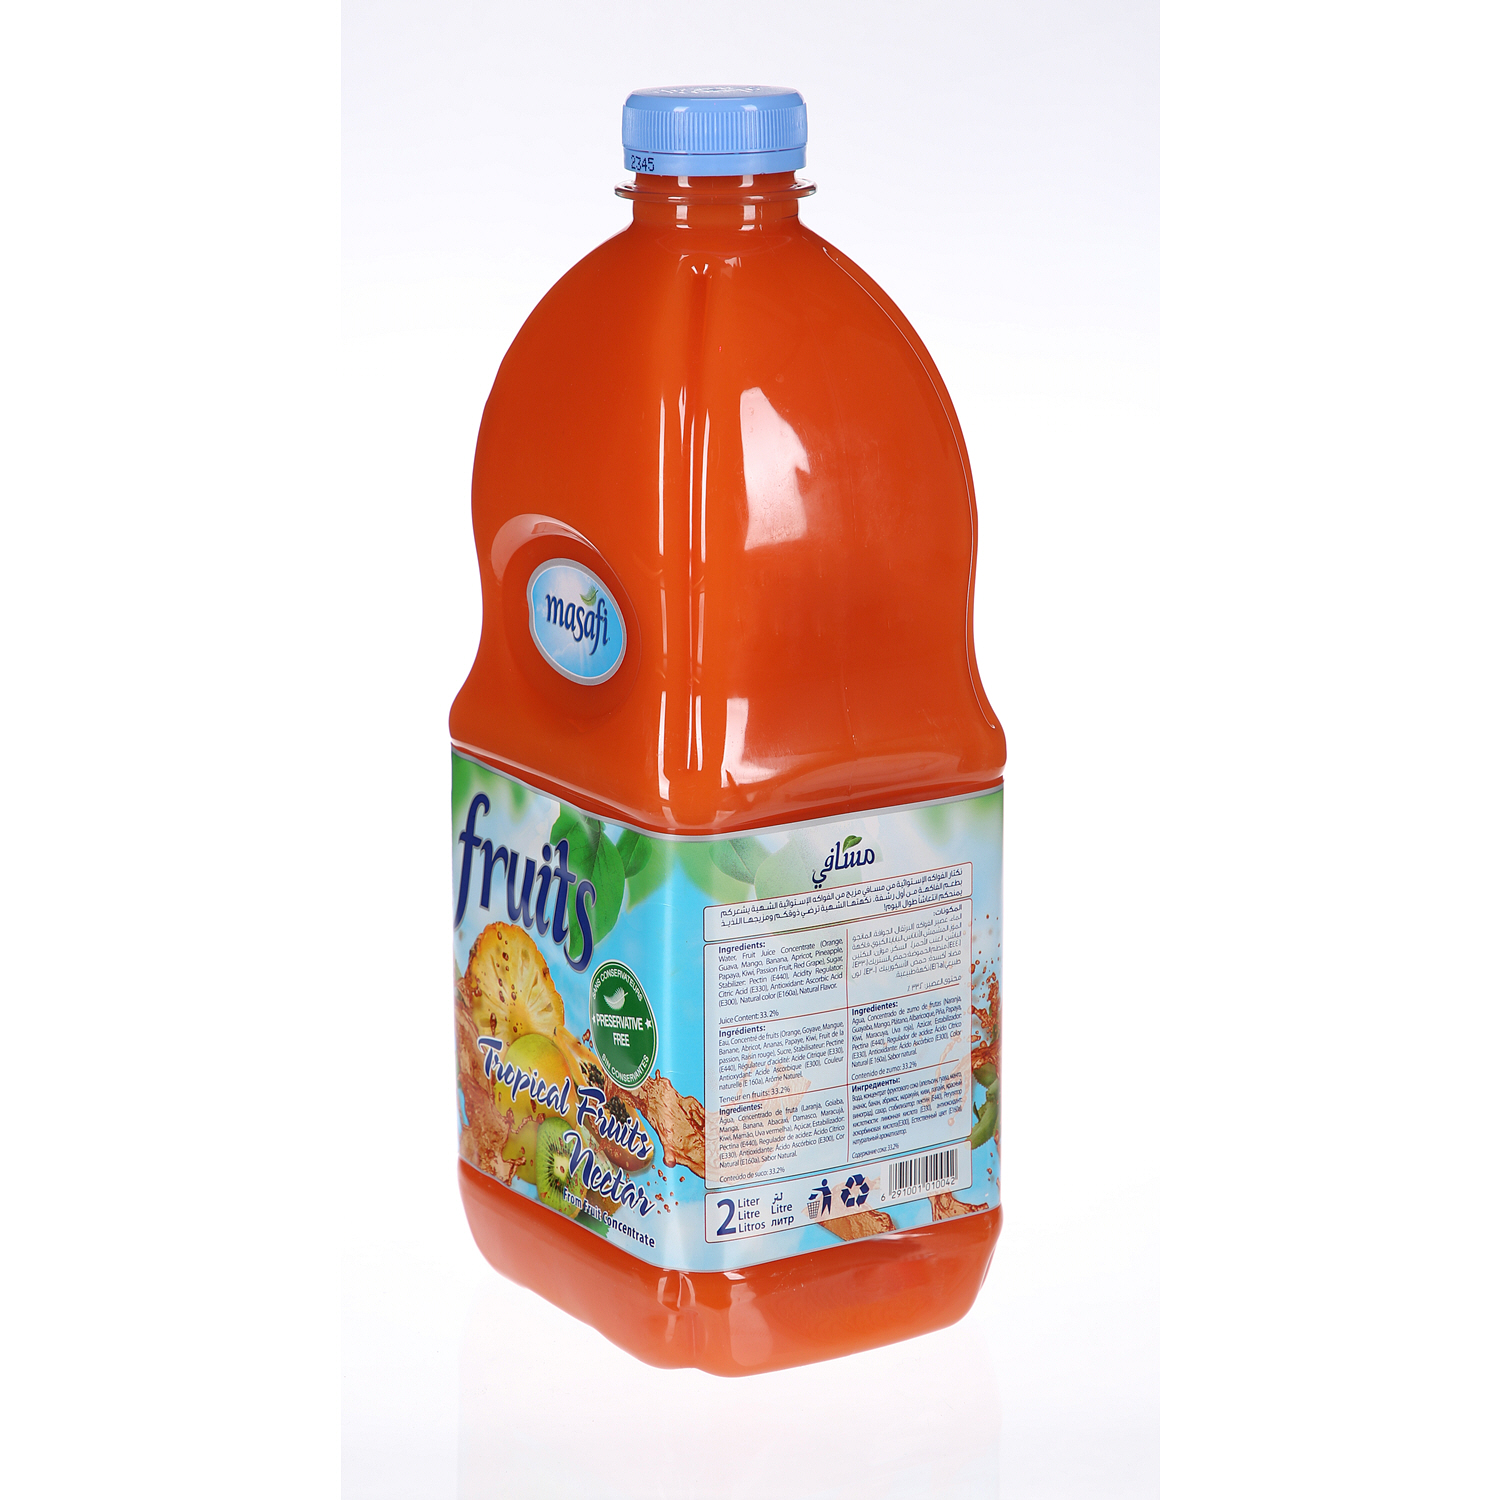 Masafi Fruit Juice Tropical 2Ltr